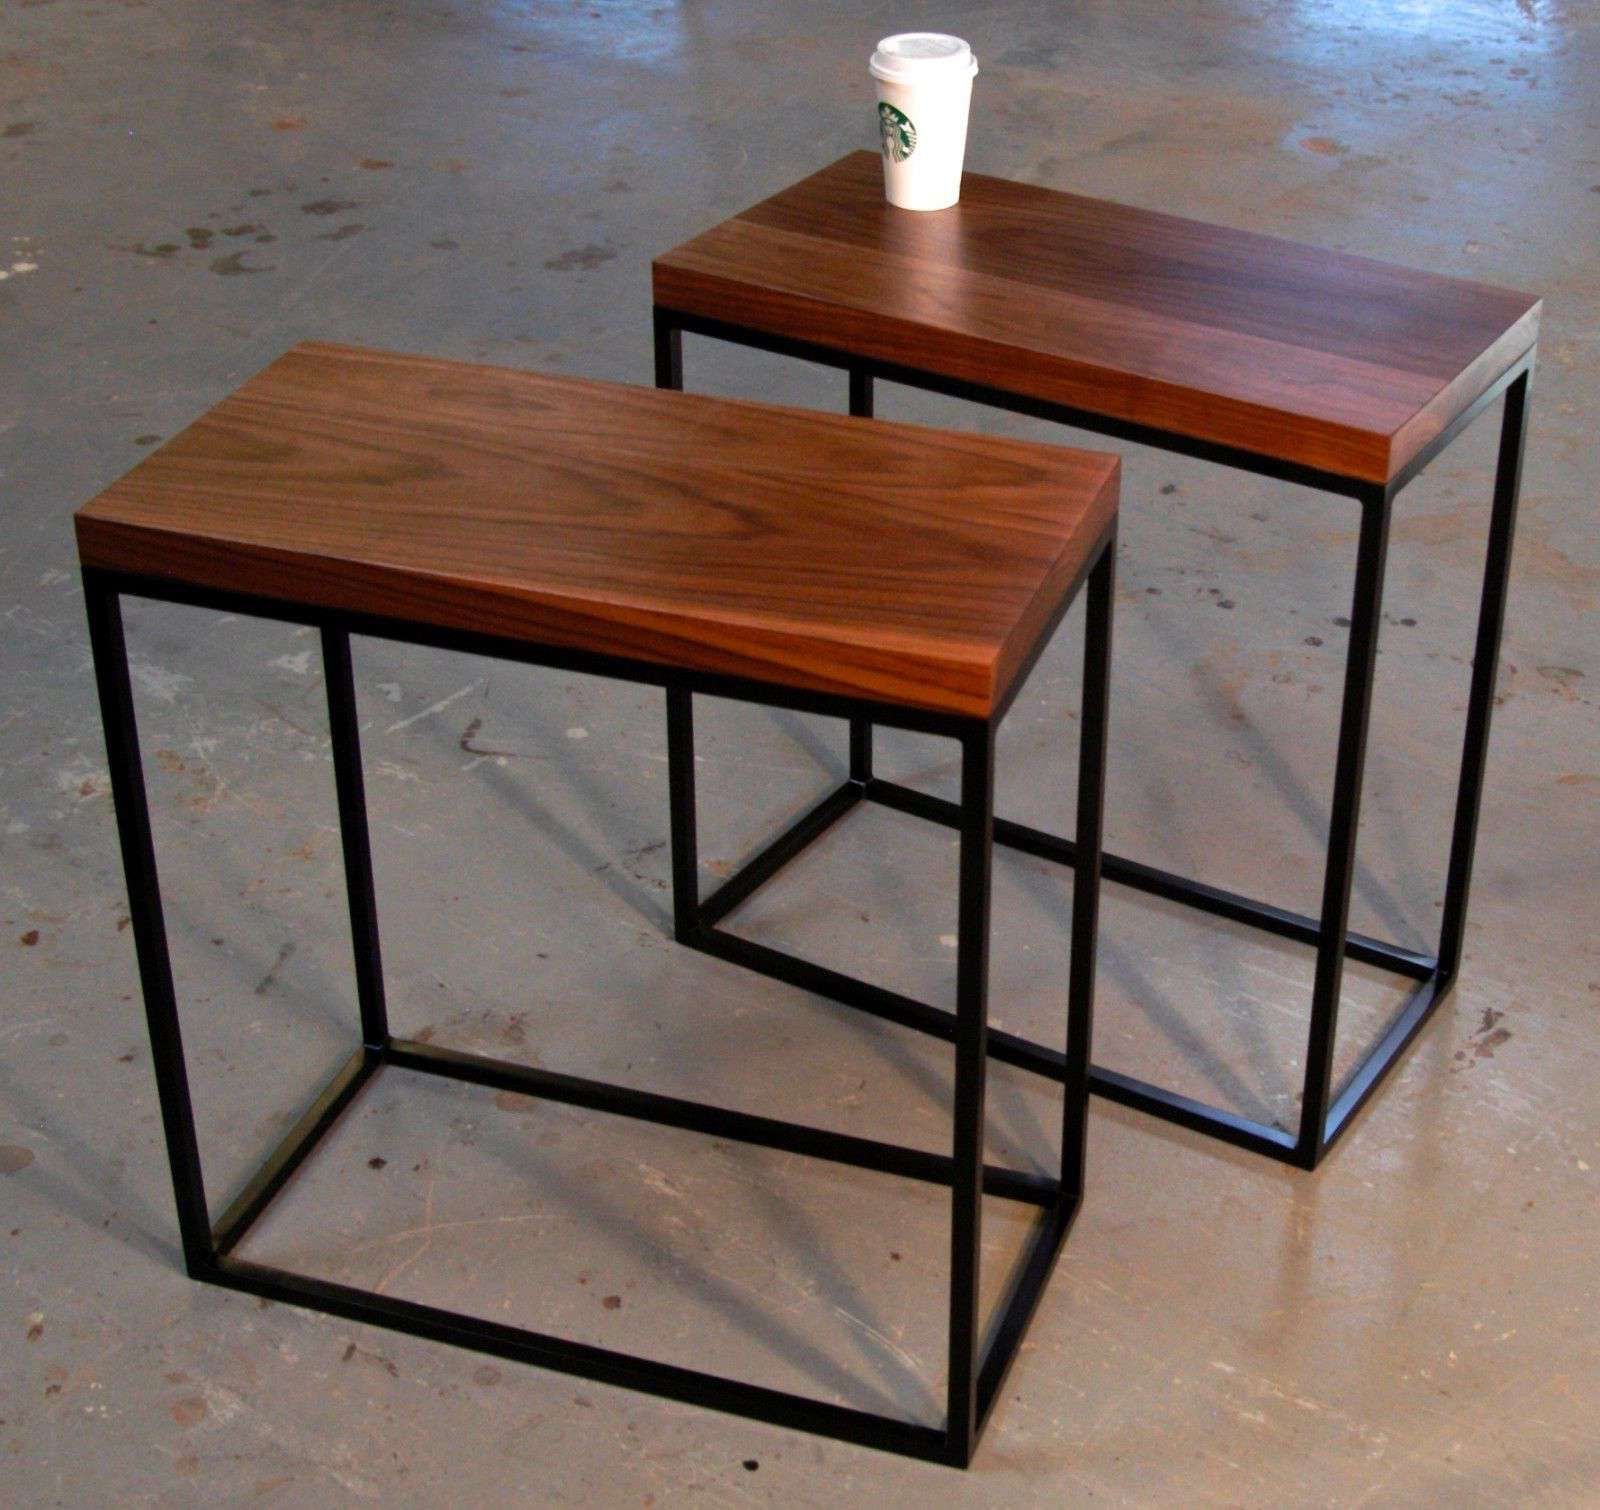 Fashionable Thin Coffee Tables Regarding Coffee Table : Wonderful Side Table Skinny Side Table Short Coffee (View 1 of 20)